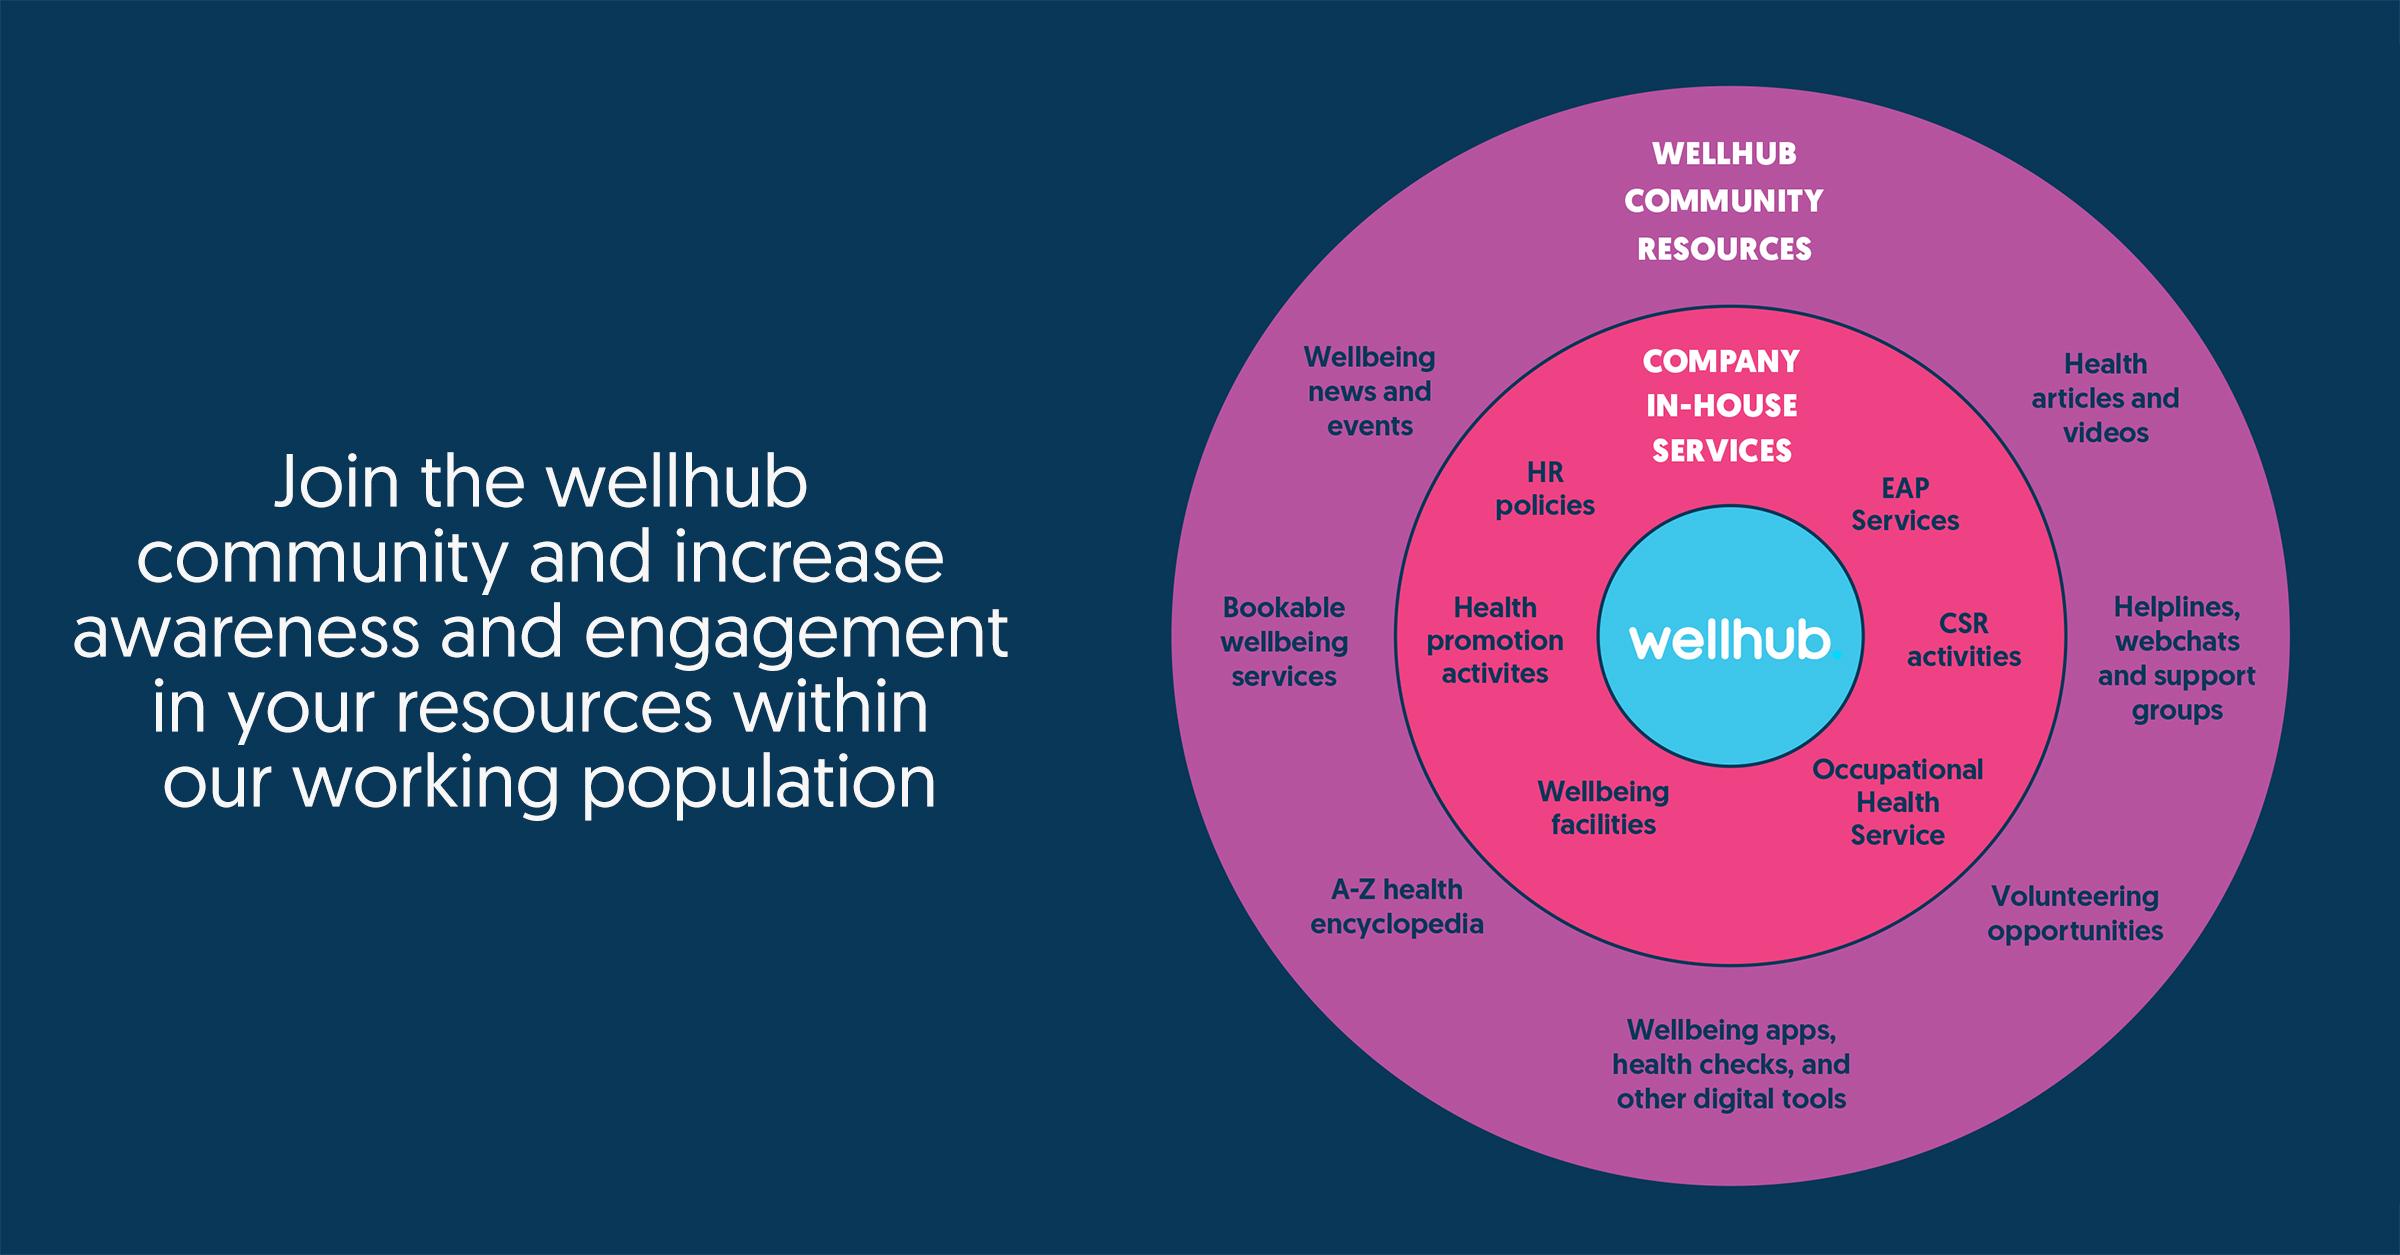 Wellhub community resources